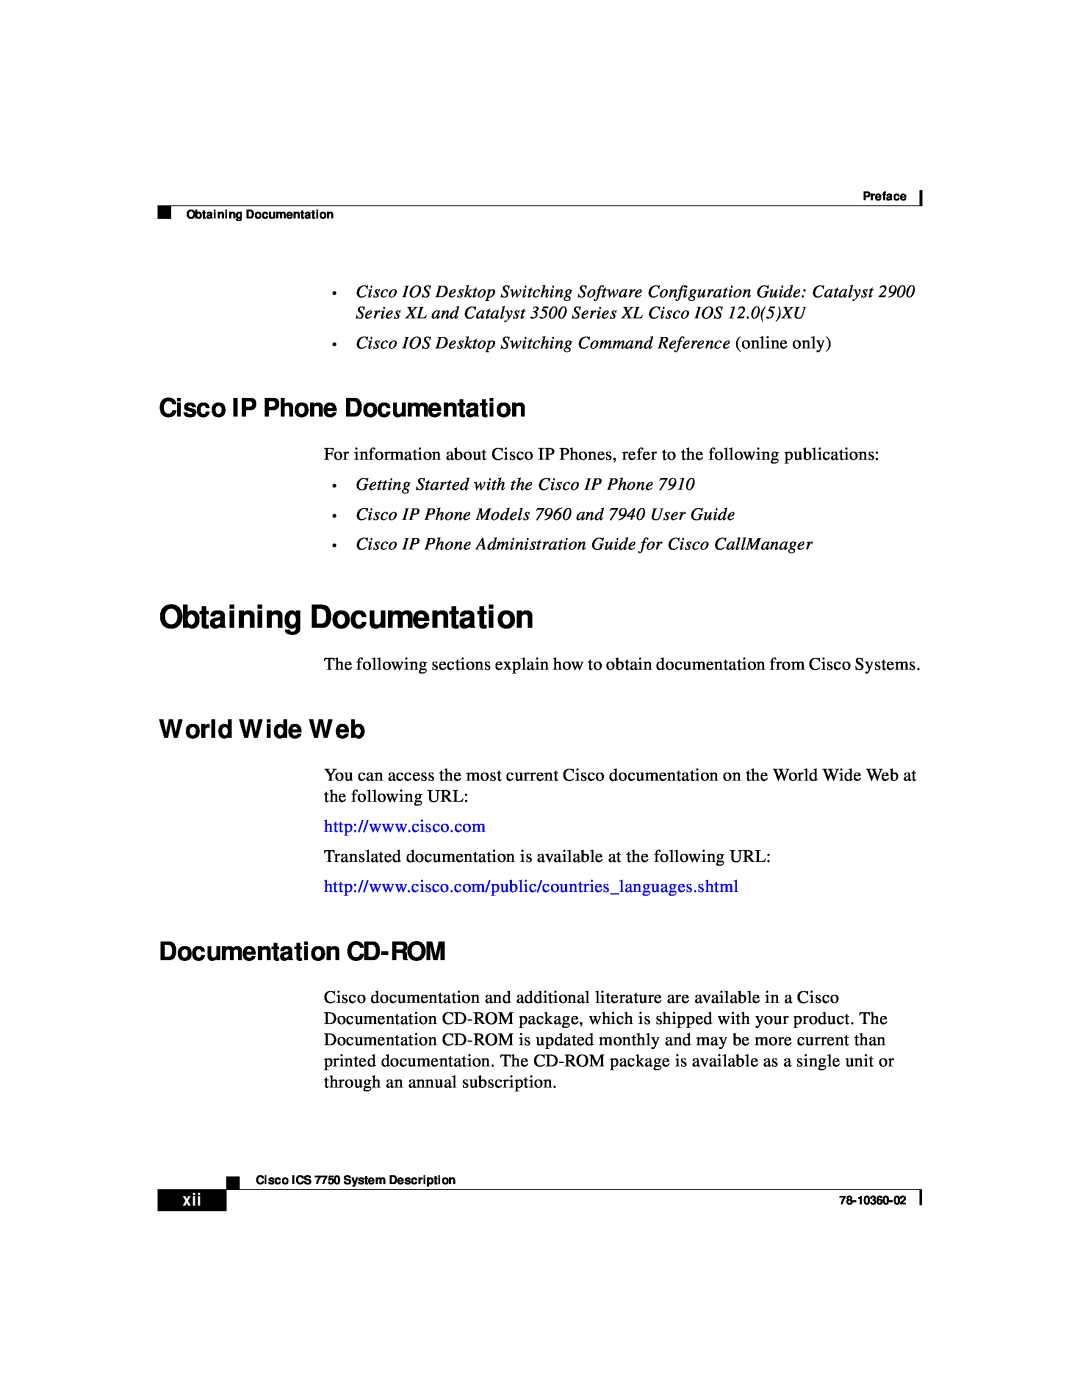 Cisco Systems ICS-7750 manual Obtaining Documentation, Cisco IP Phone Documentation, World Wide Web, Documentation CD-ROM 